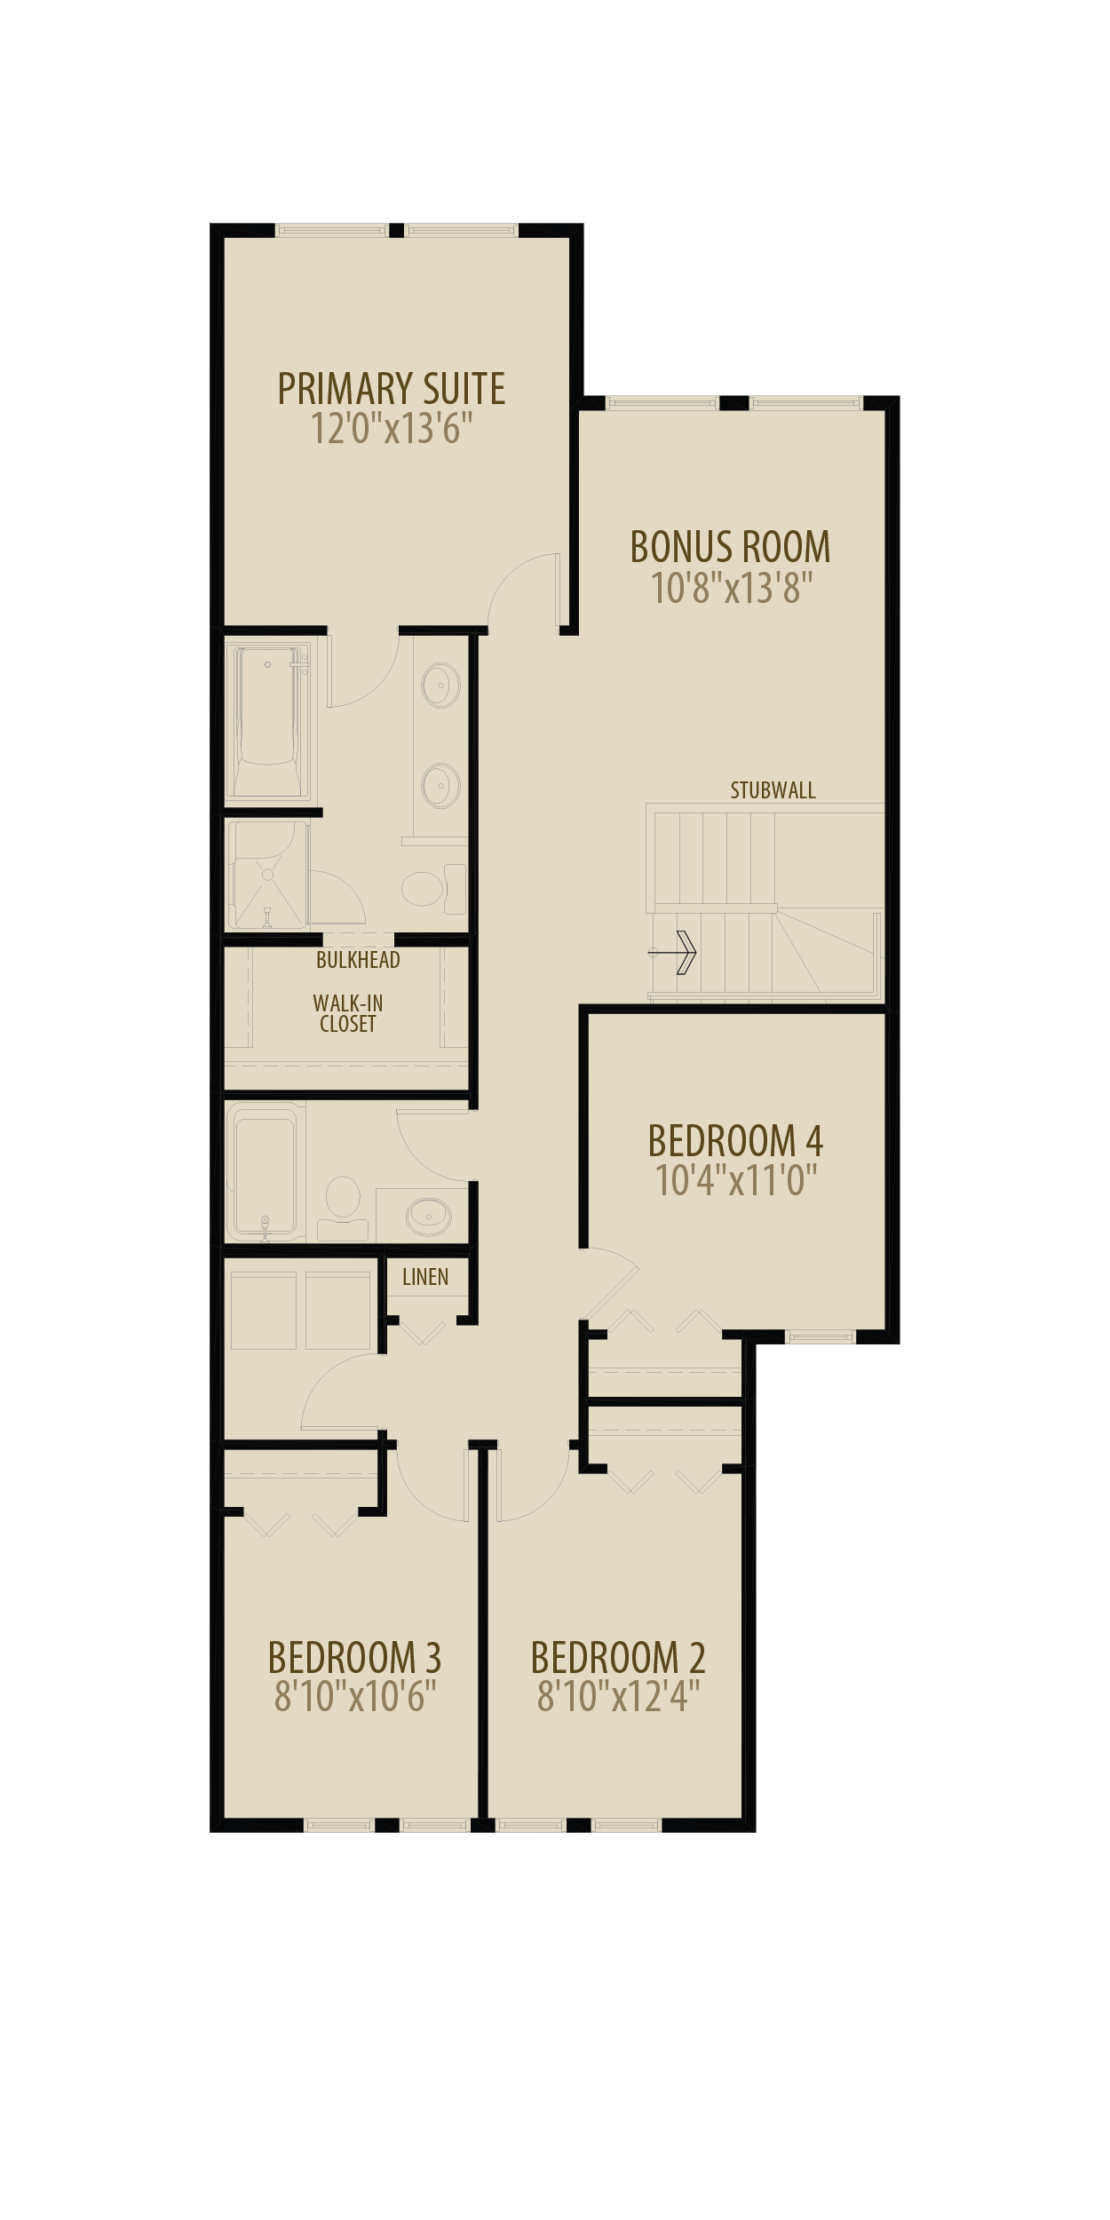 4th Bedroom Bonusroom 2 adds 86 sq ft